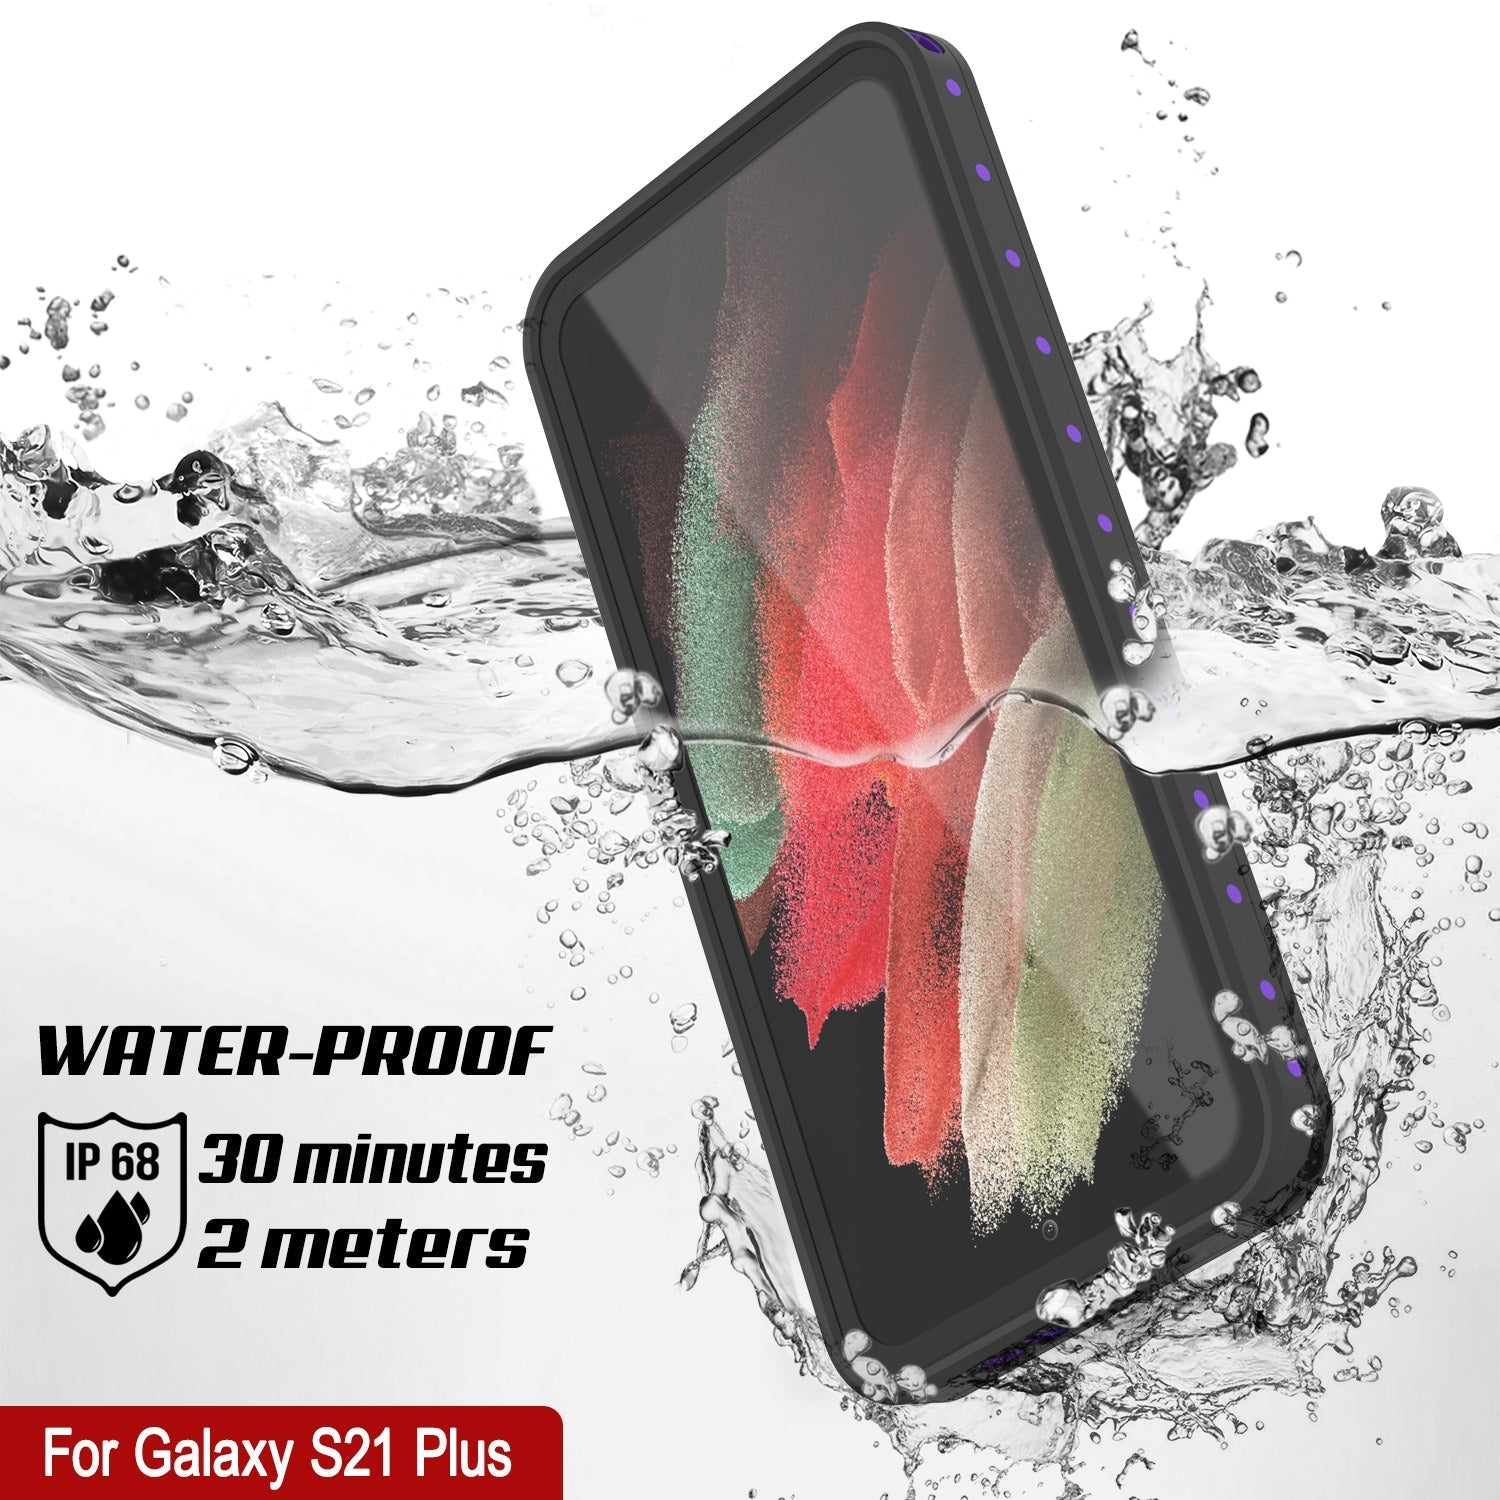 Galaxy S22+ Plus Waterproof Case PunkCase StudStar Purple Thin 6.6ft Underwater IP68 Shock/Snow Proof